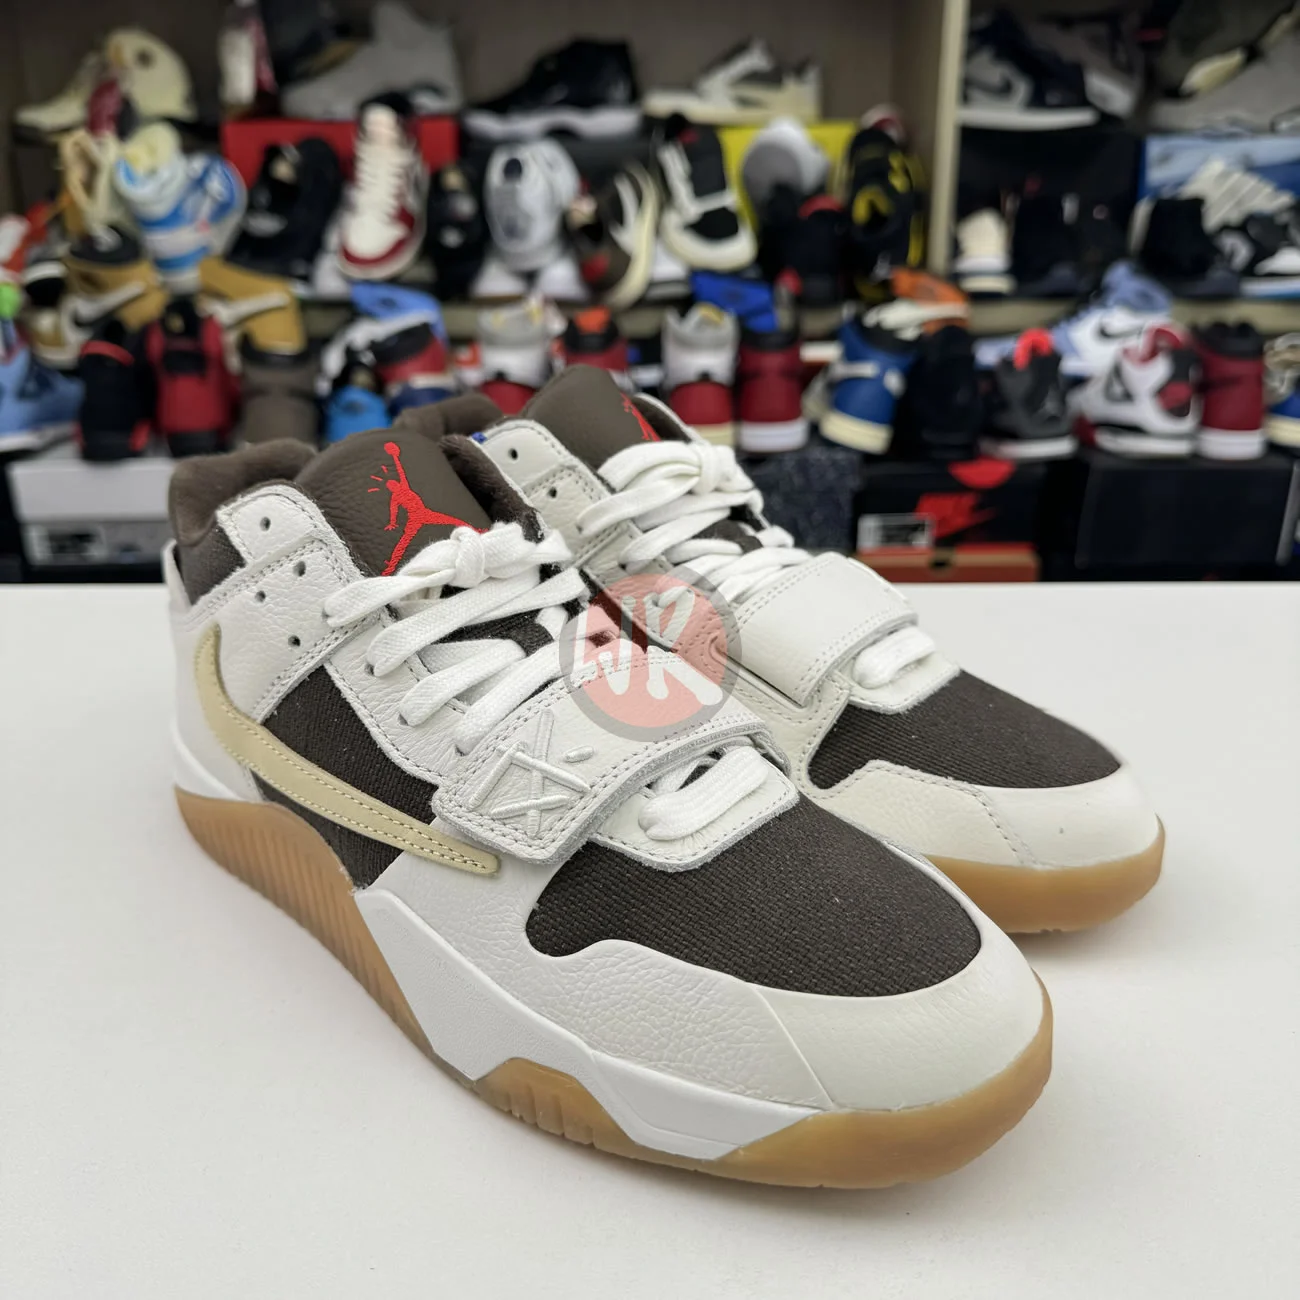 Travis Scott X Jordan Cut The Check Trainer Release Date Ljr Sneakers (12) - bc-ljr.com